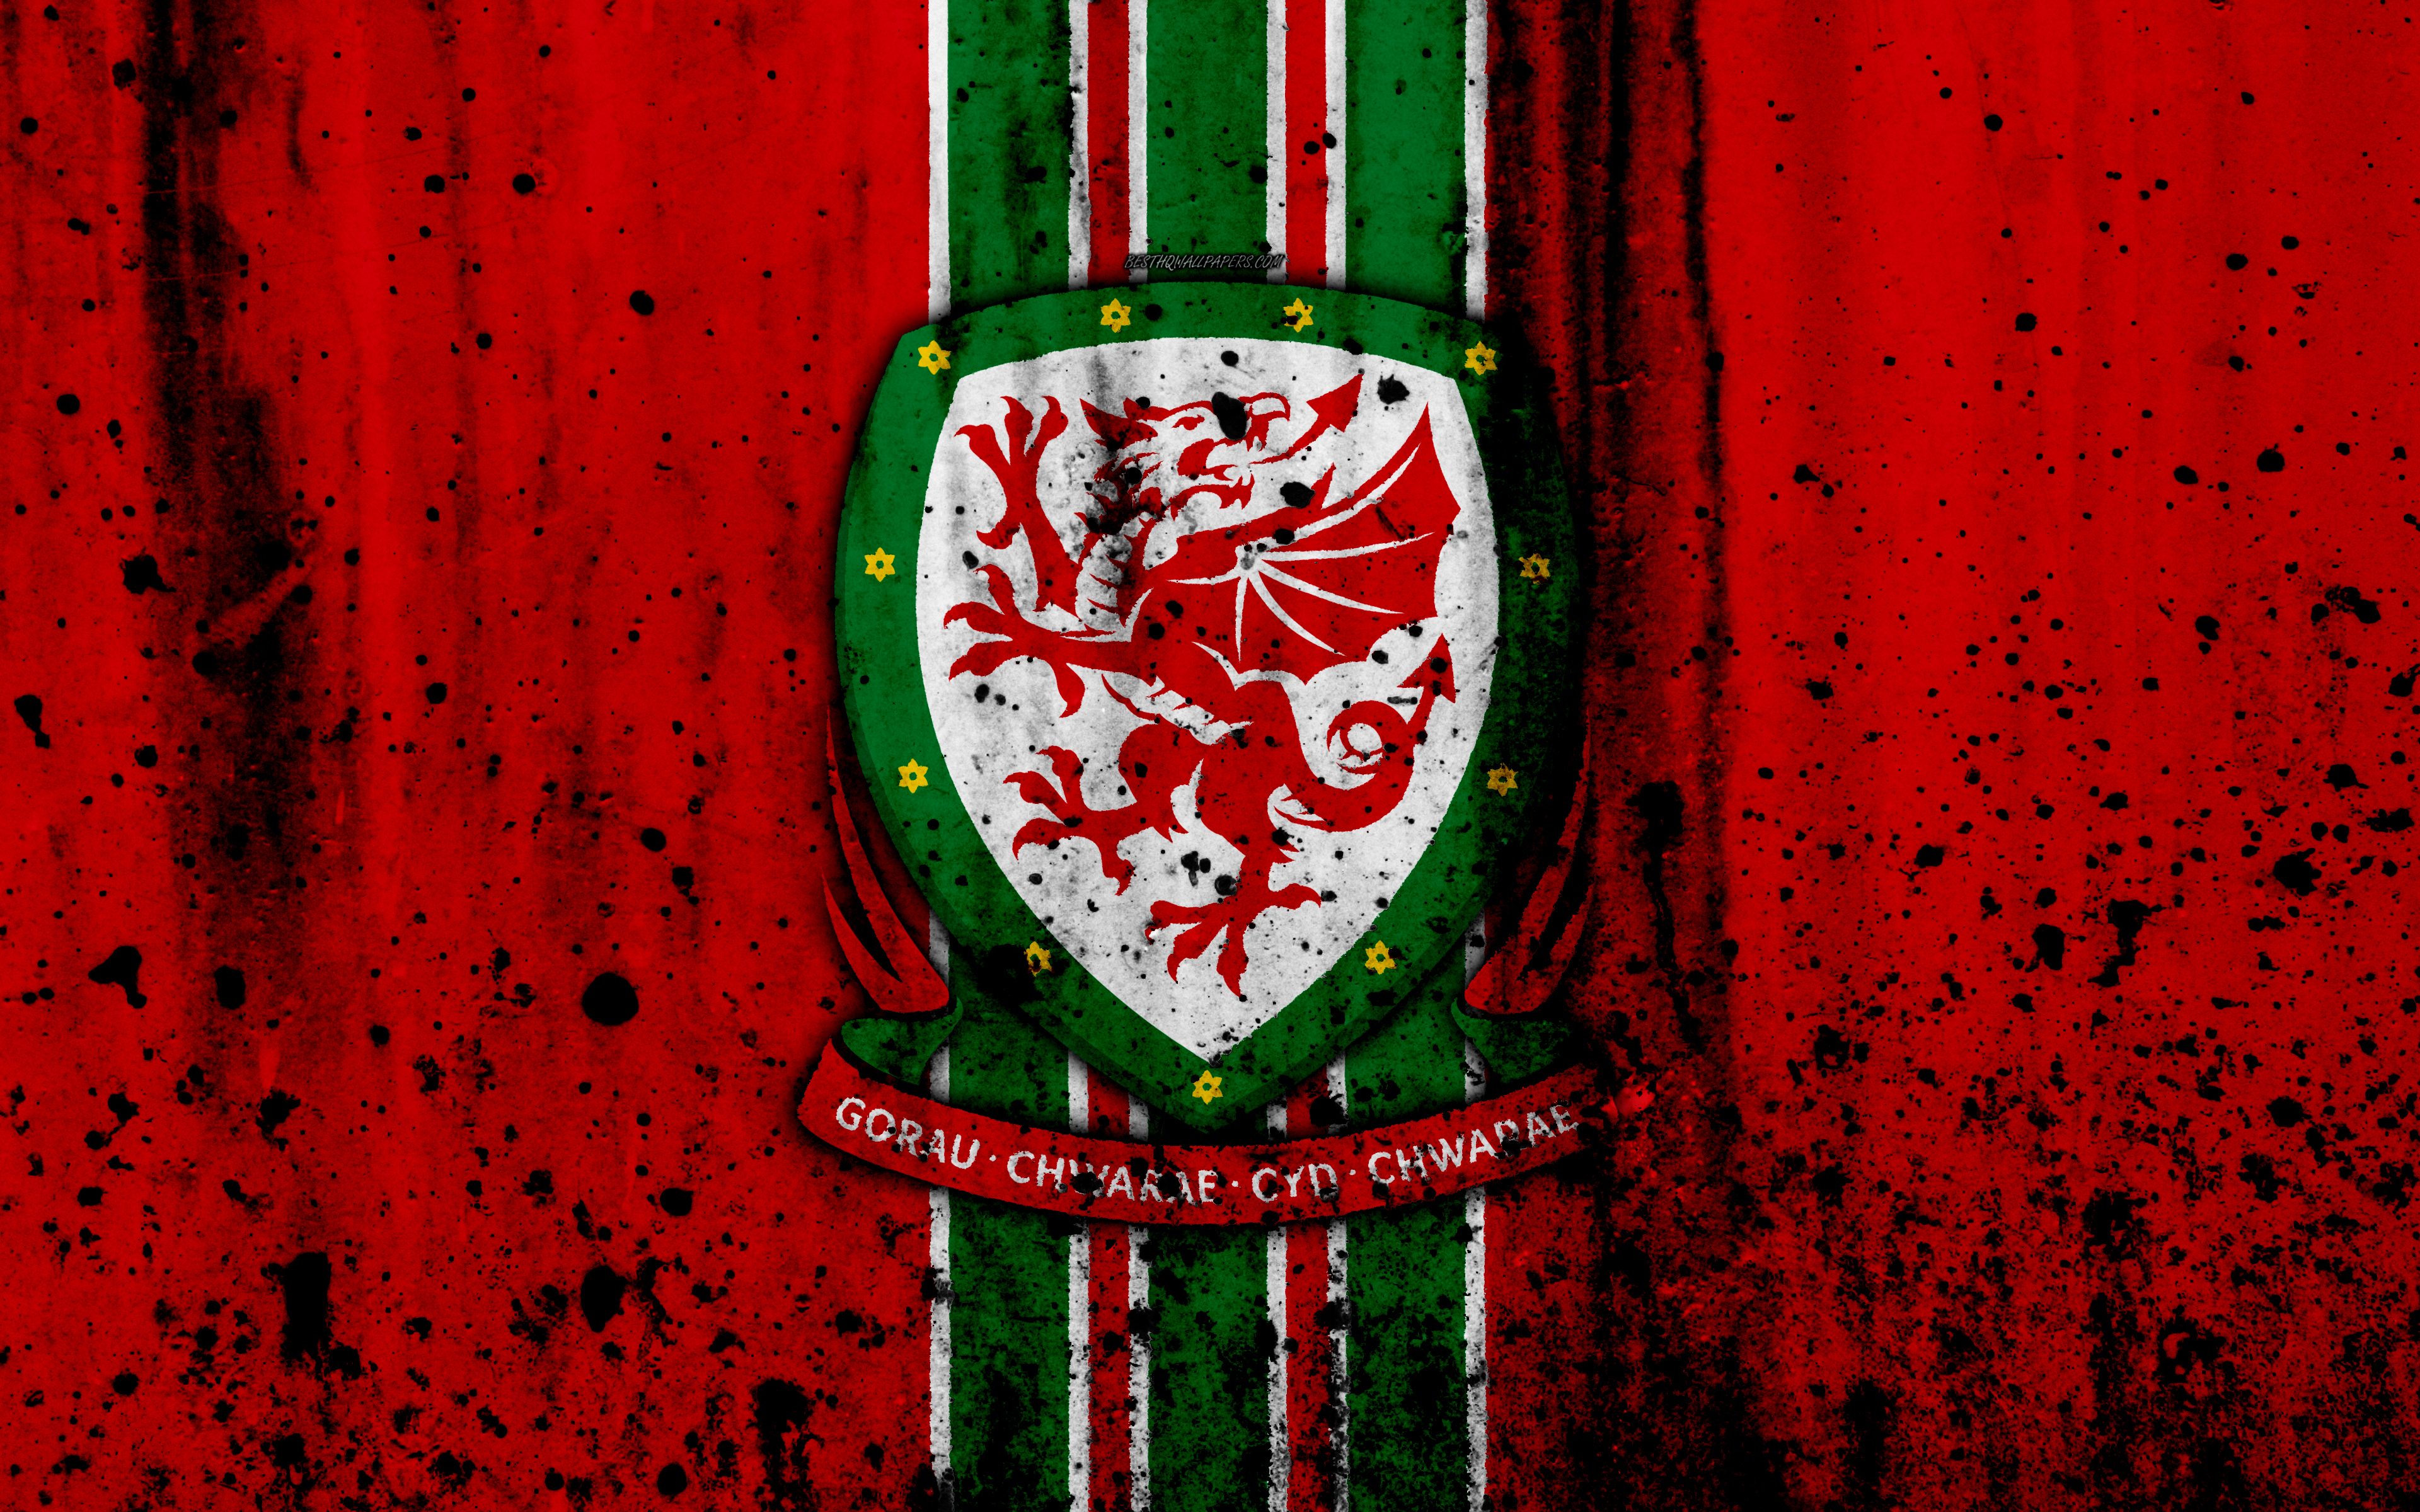 Download wallpapers Wales national football team 4k logo grunge